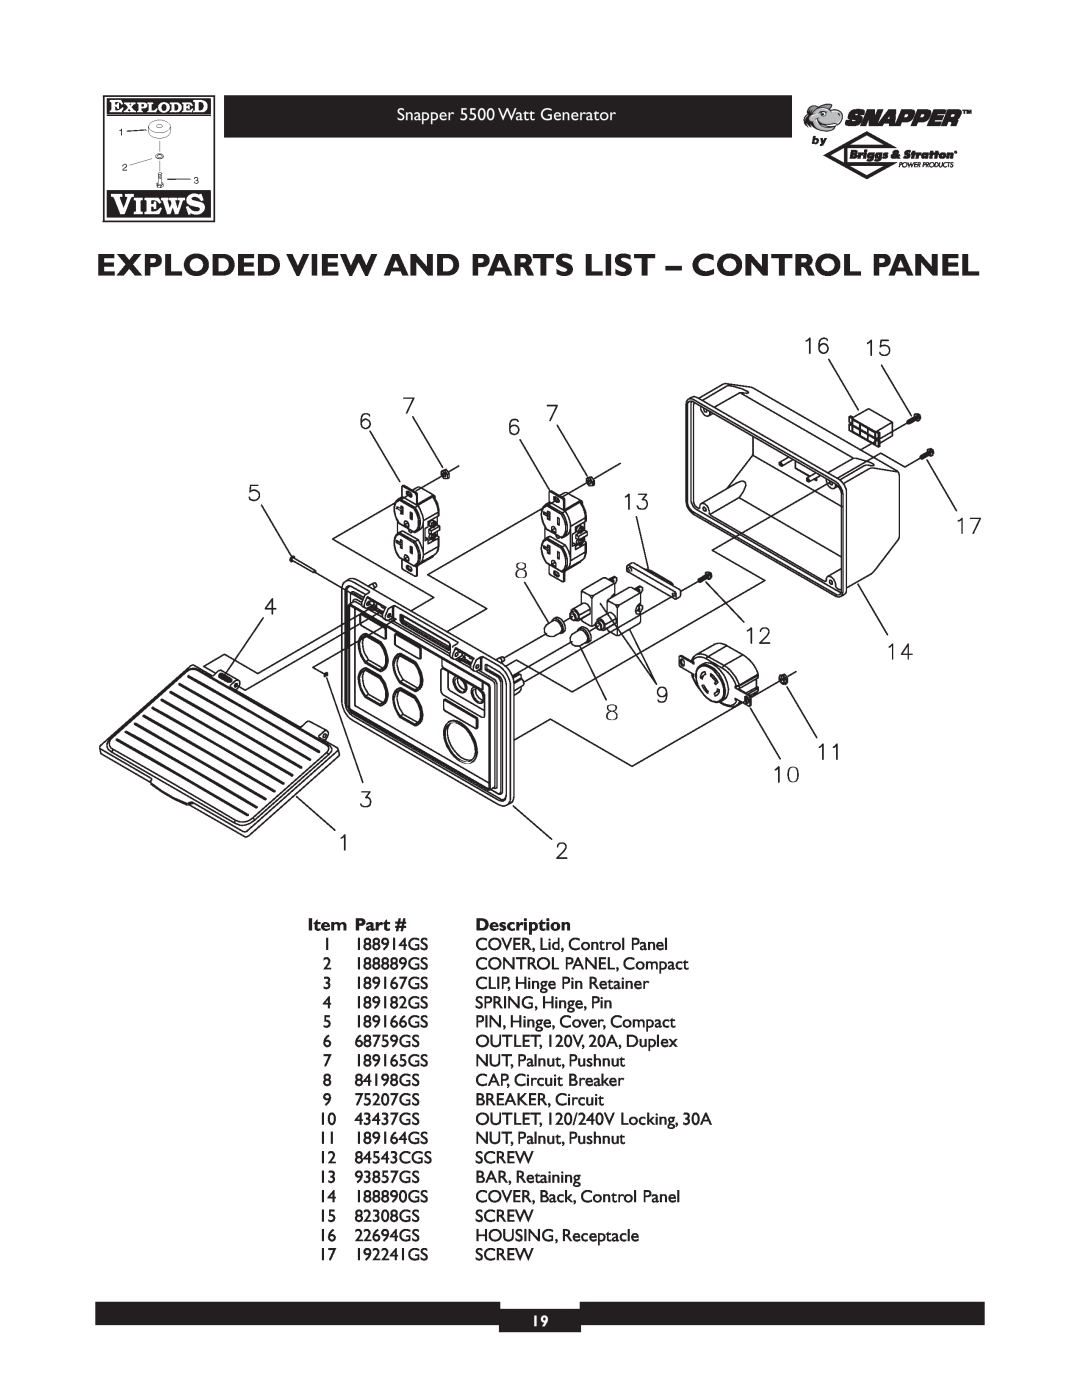 Snapper 1668-0 owner manual Exploded View And Parts List - Control Panel, Snapper 5500 Watt Generator, Description 